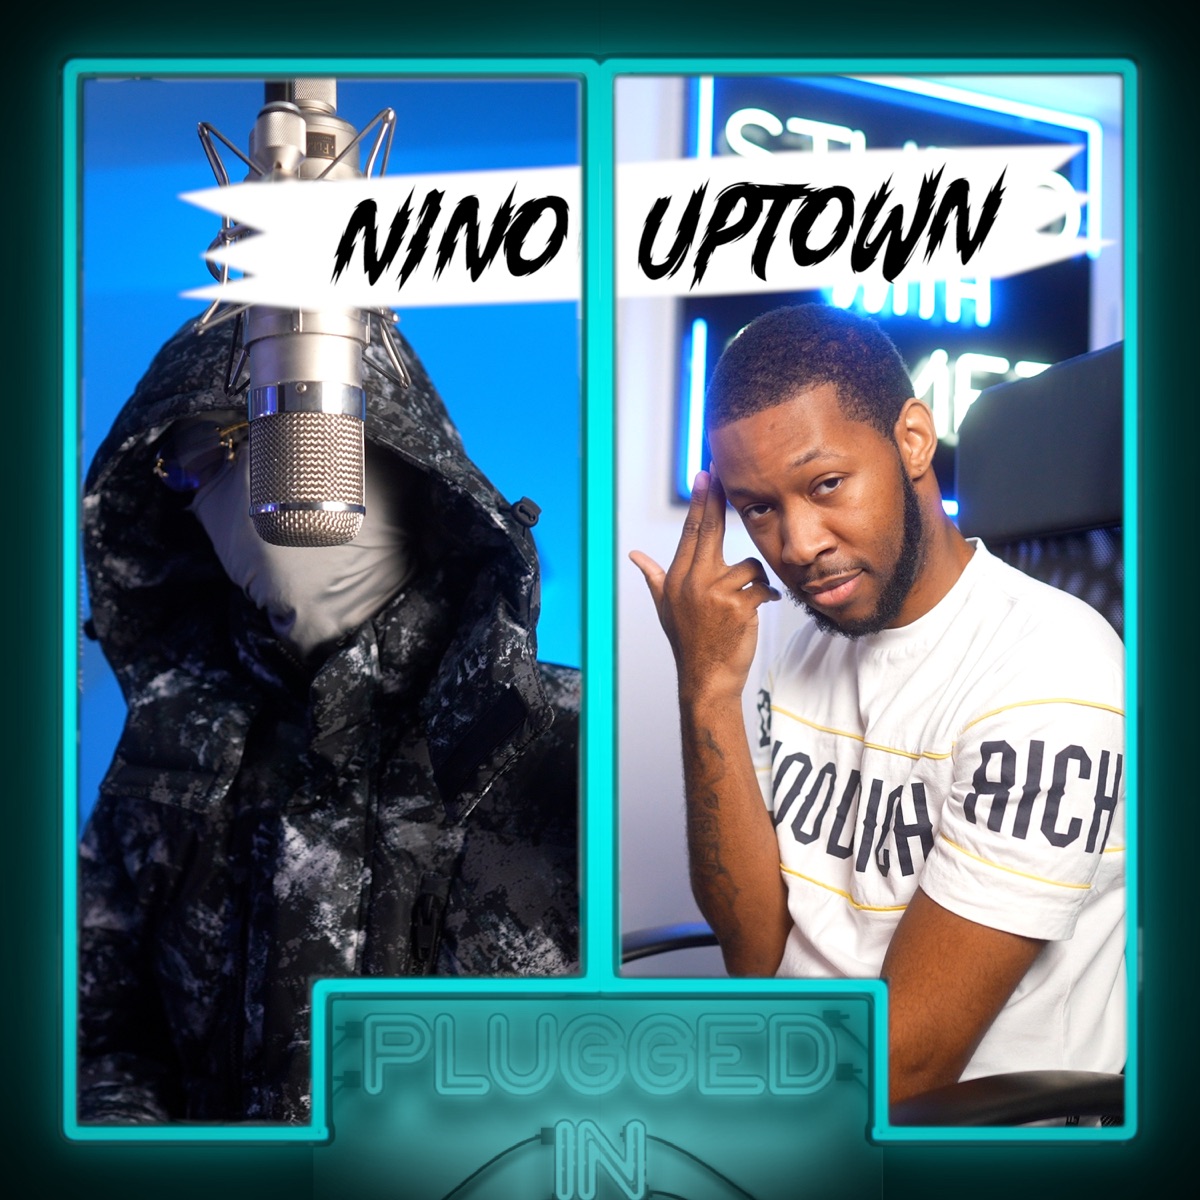 Nino Uptown – Growing Up Lyrics